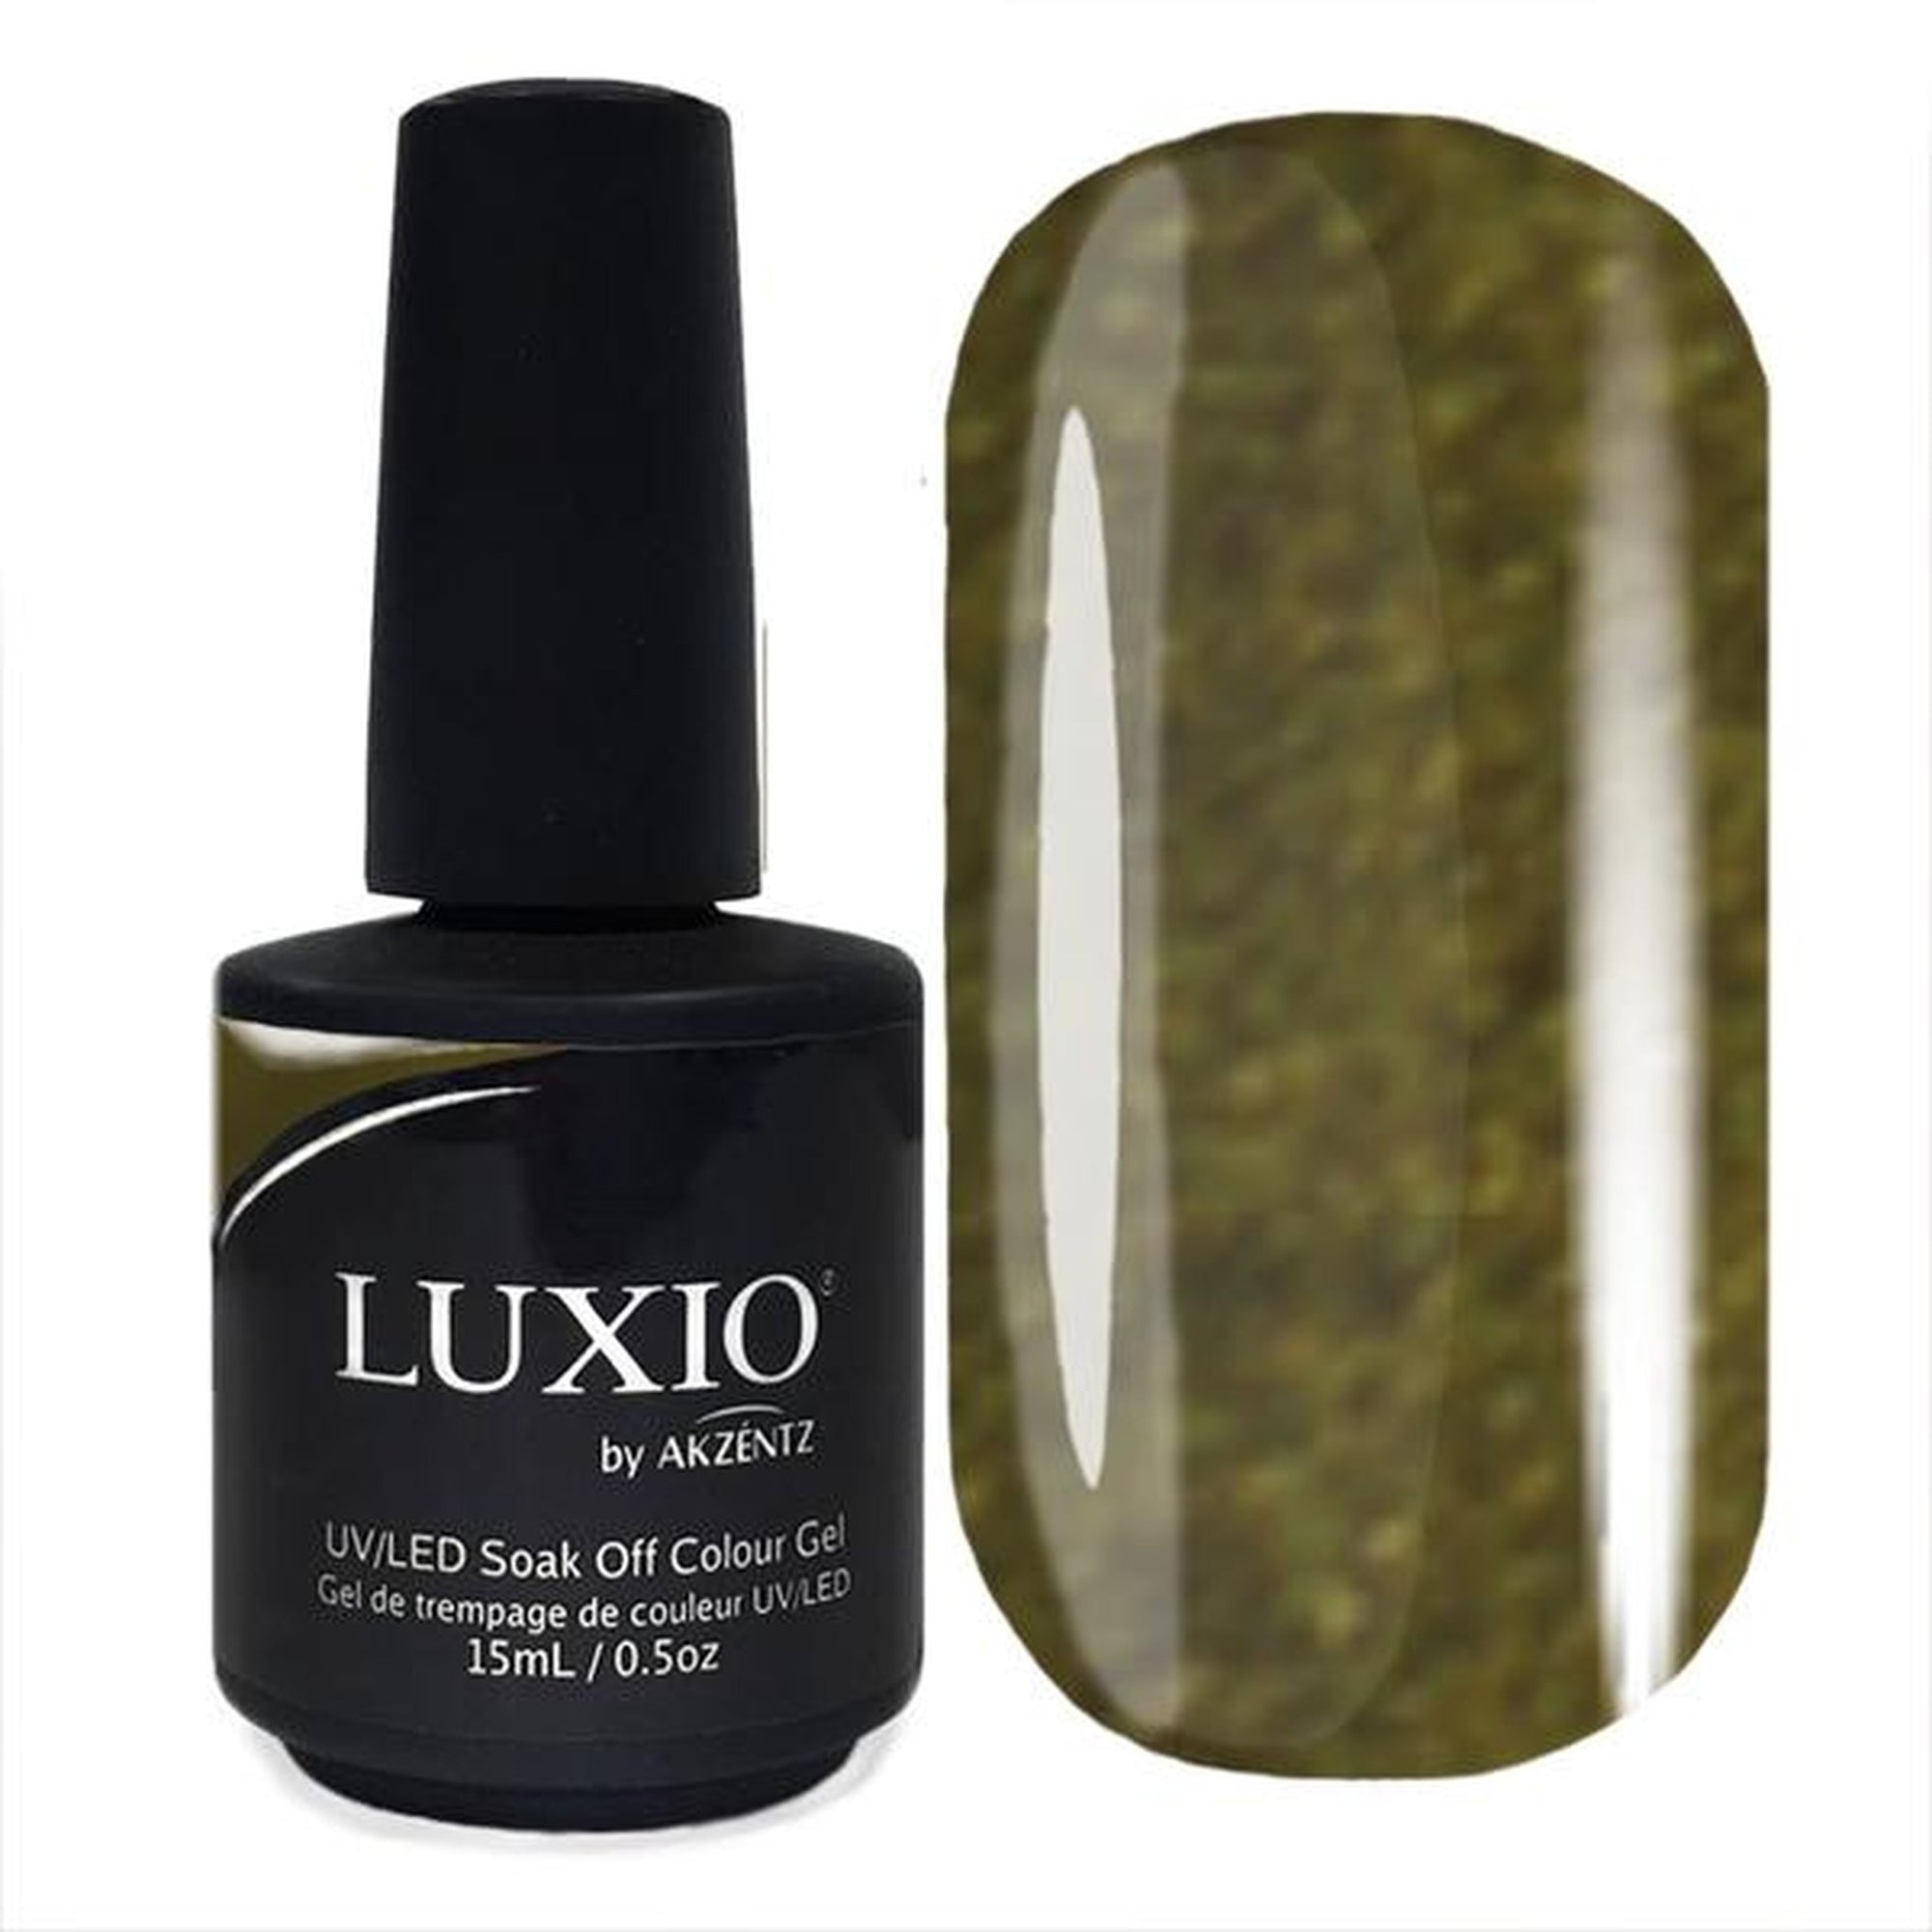 Luxio Fantasy-Gel Essentialz